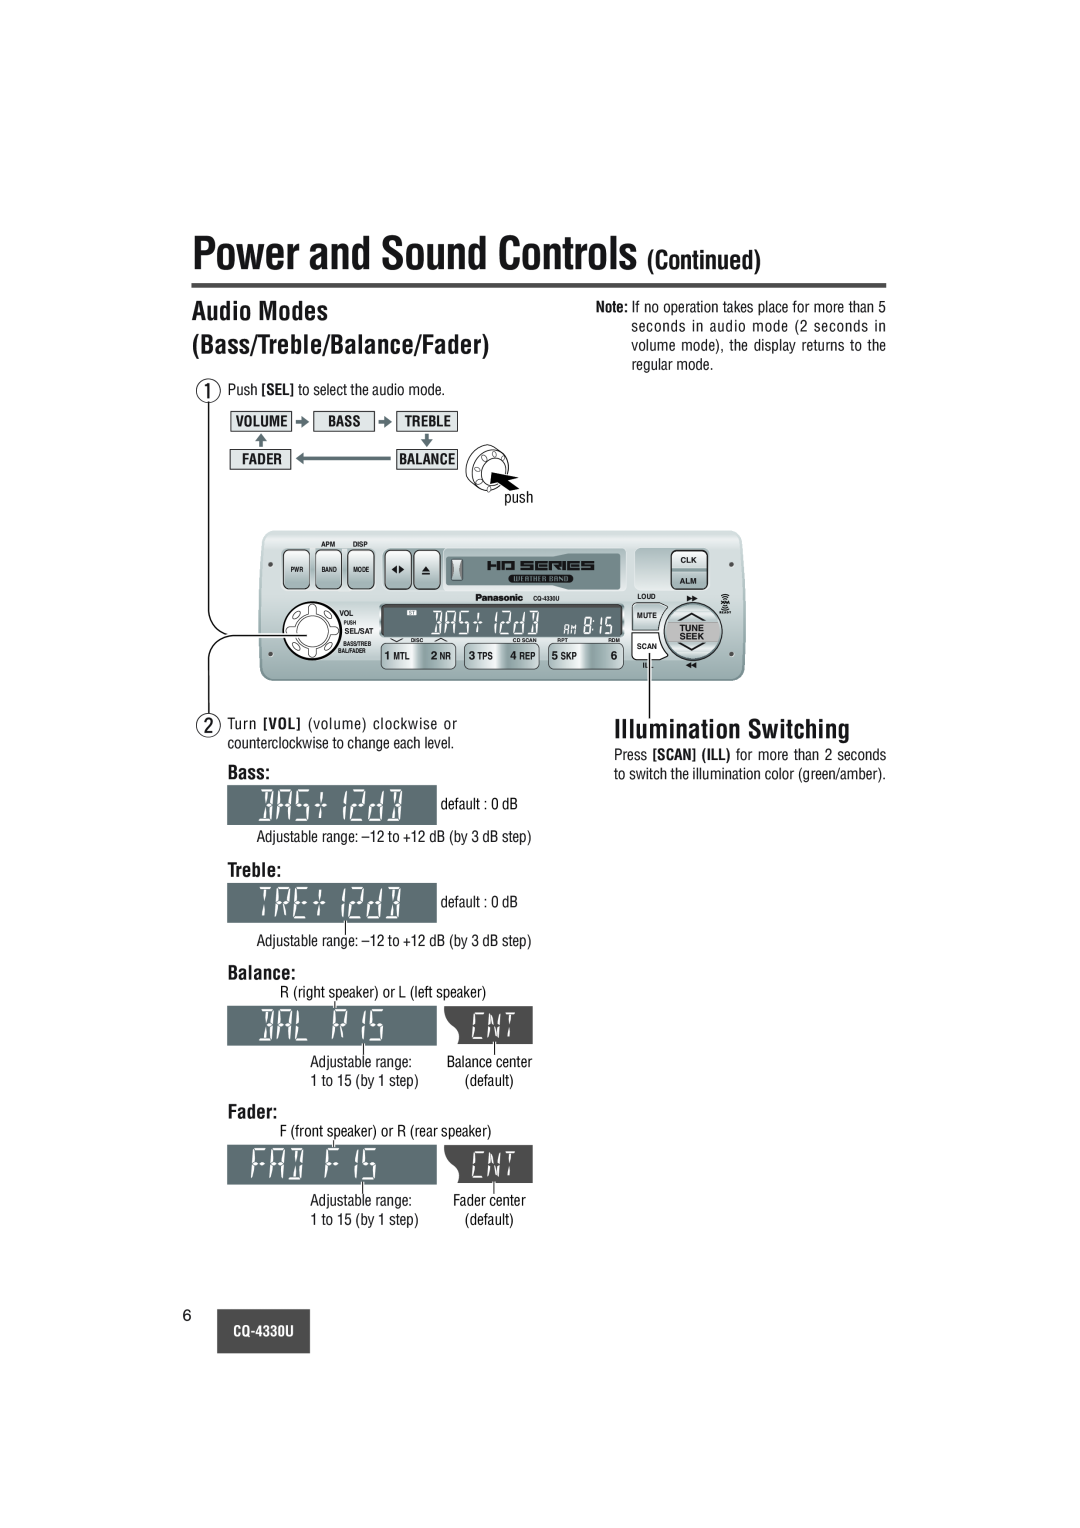 Panasonic CQ-4330U manual Power and Sound Controls Continued, Illumination Switching, Audio Modes Bass/Treble/Balance/Fader 